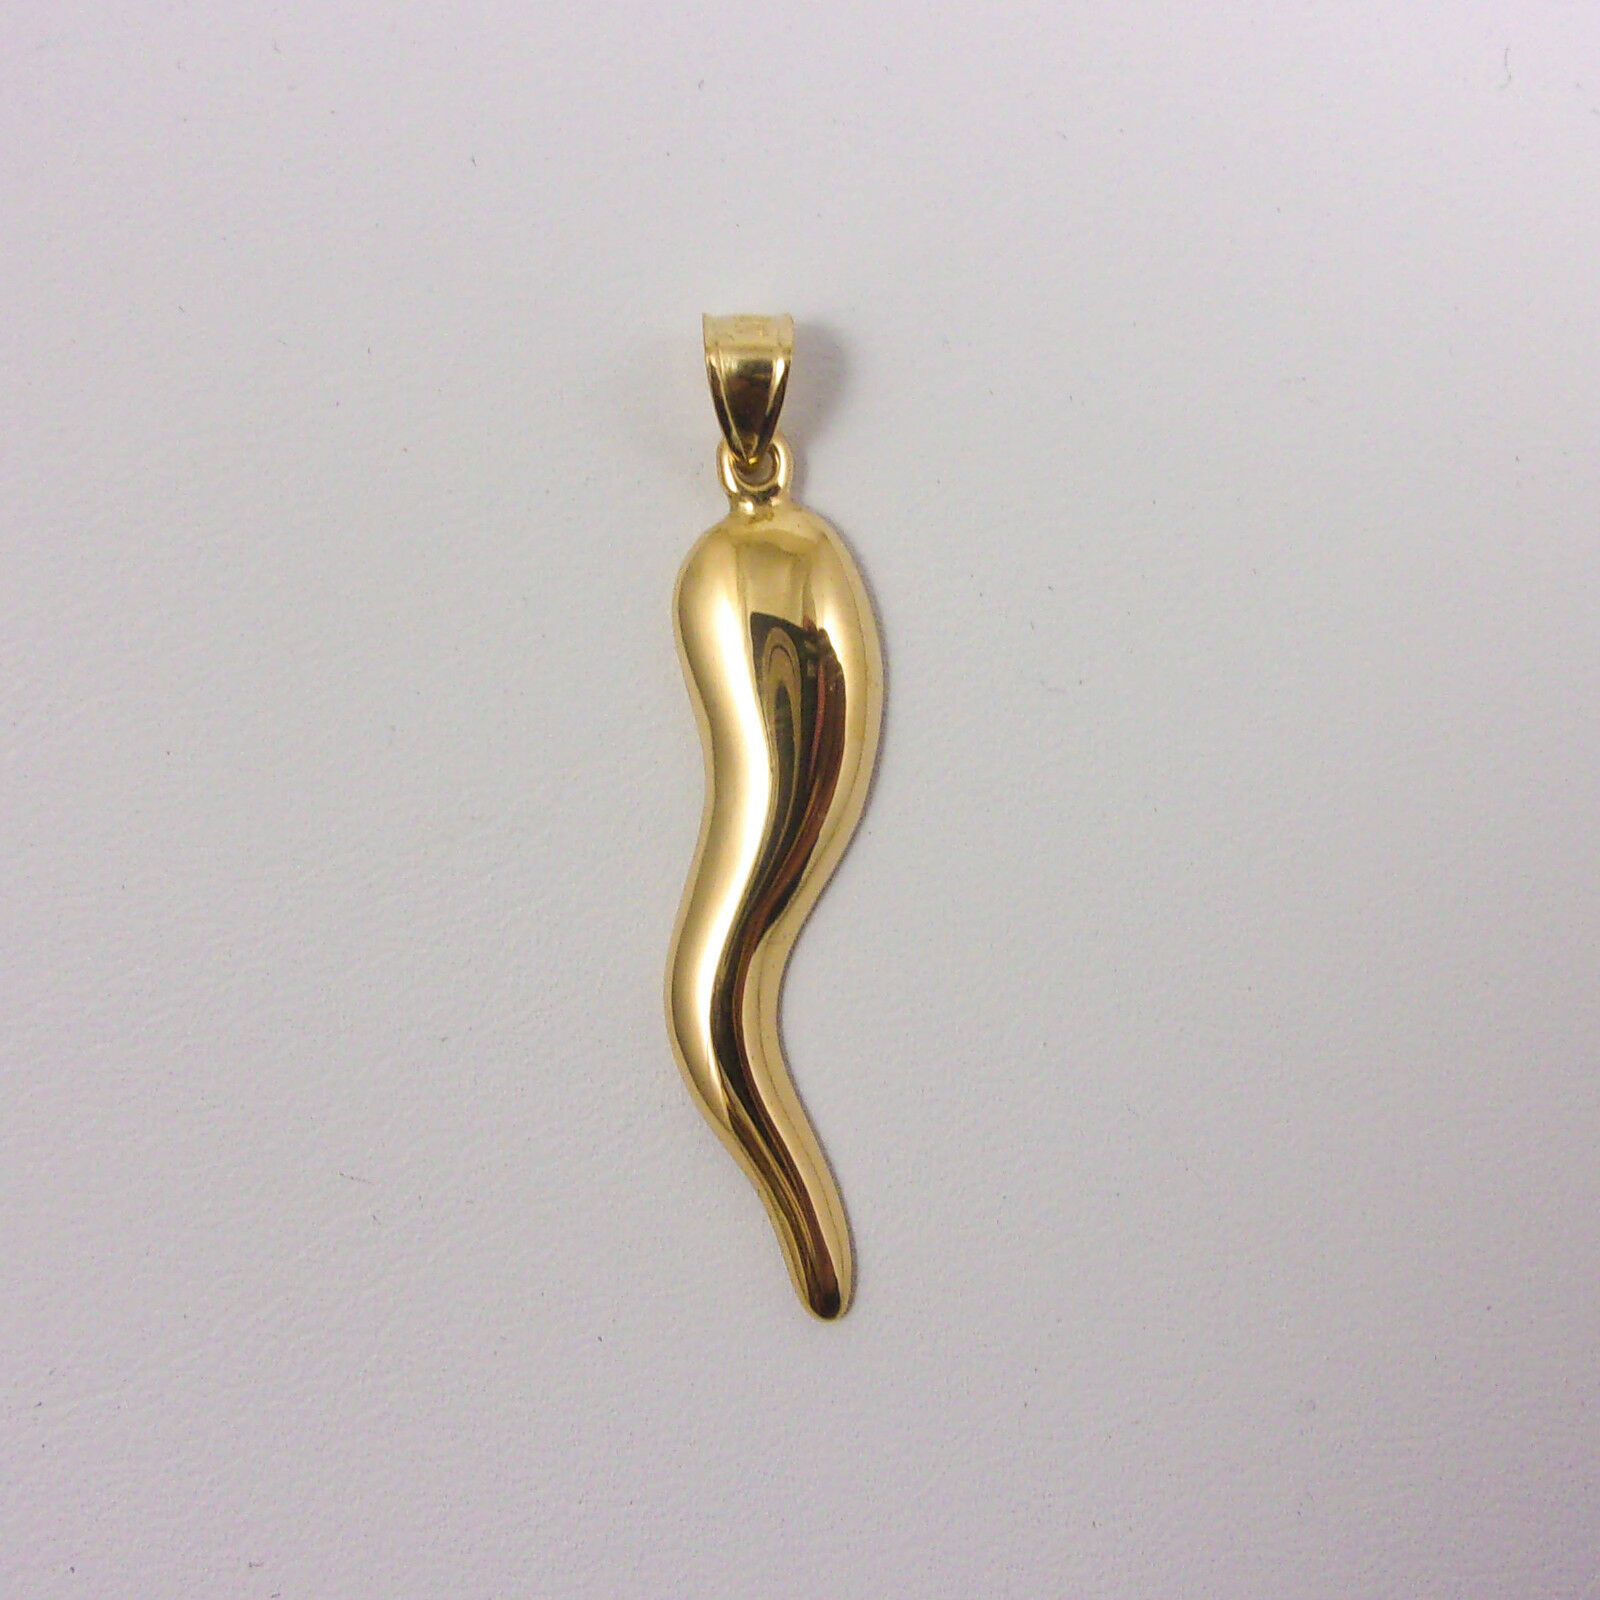 Solid 14K Yellow Gold Italian Horn Pendant Cornicello Pendant, 2.8 grams,  1.6